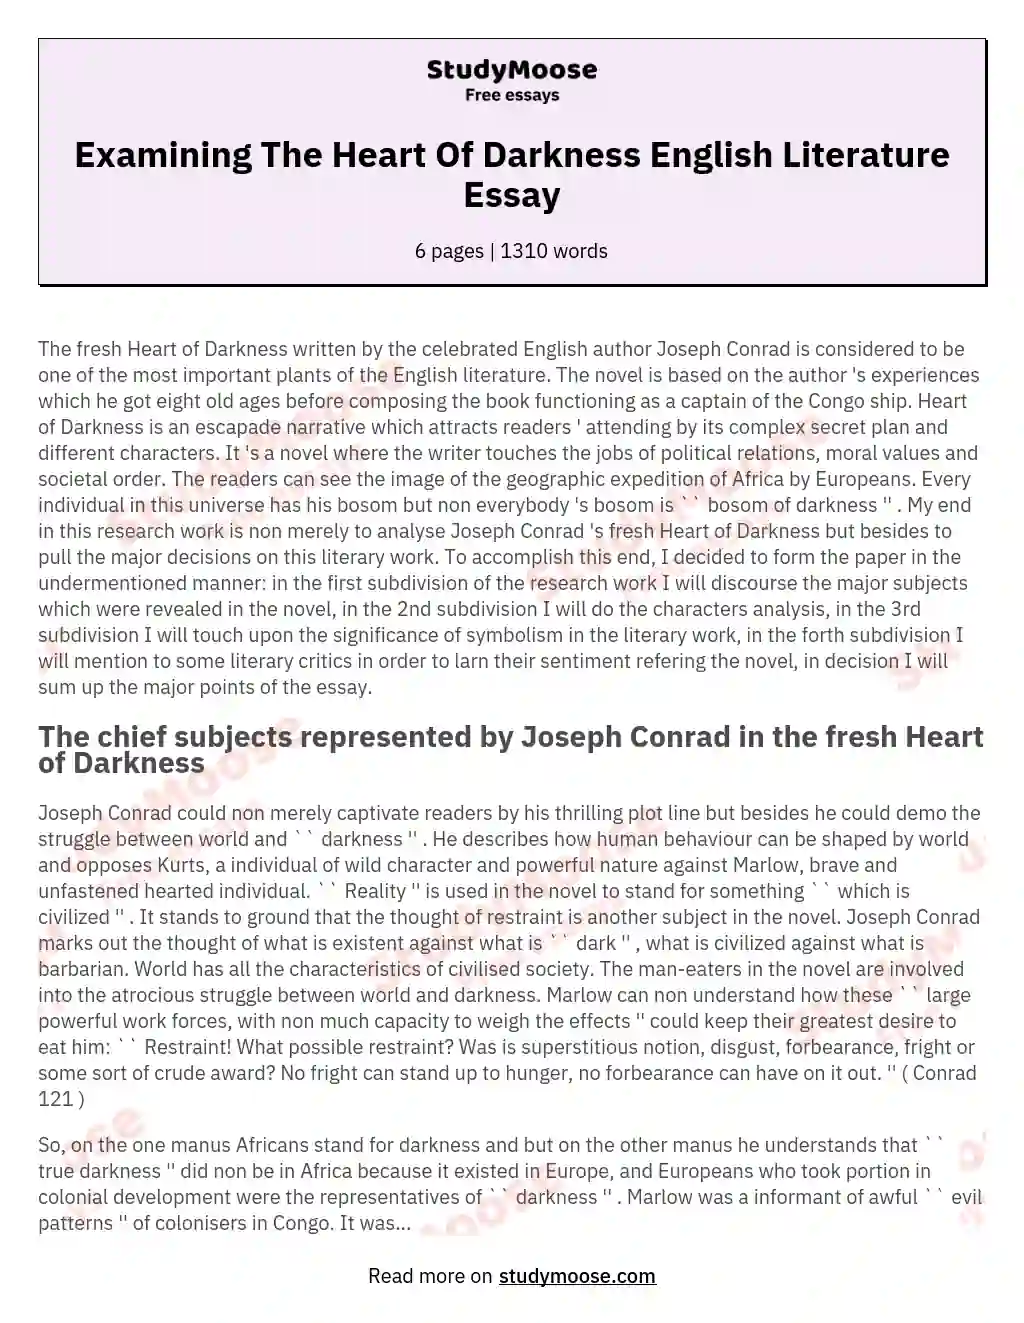 Examining The Heart Of Darkness English Literature Essay essay